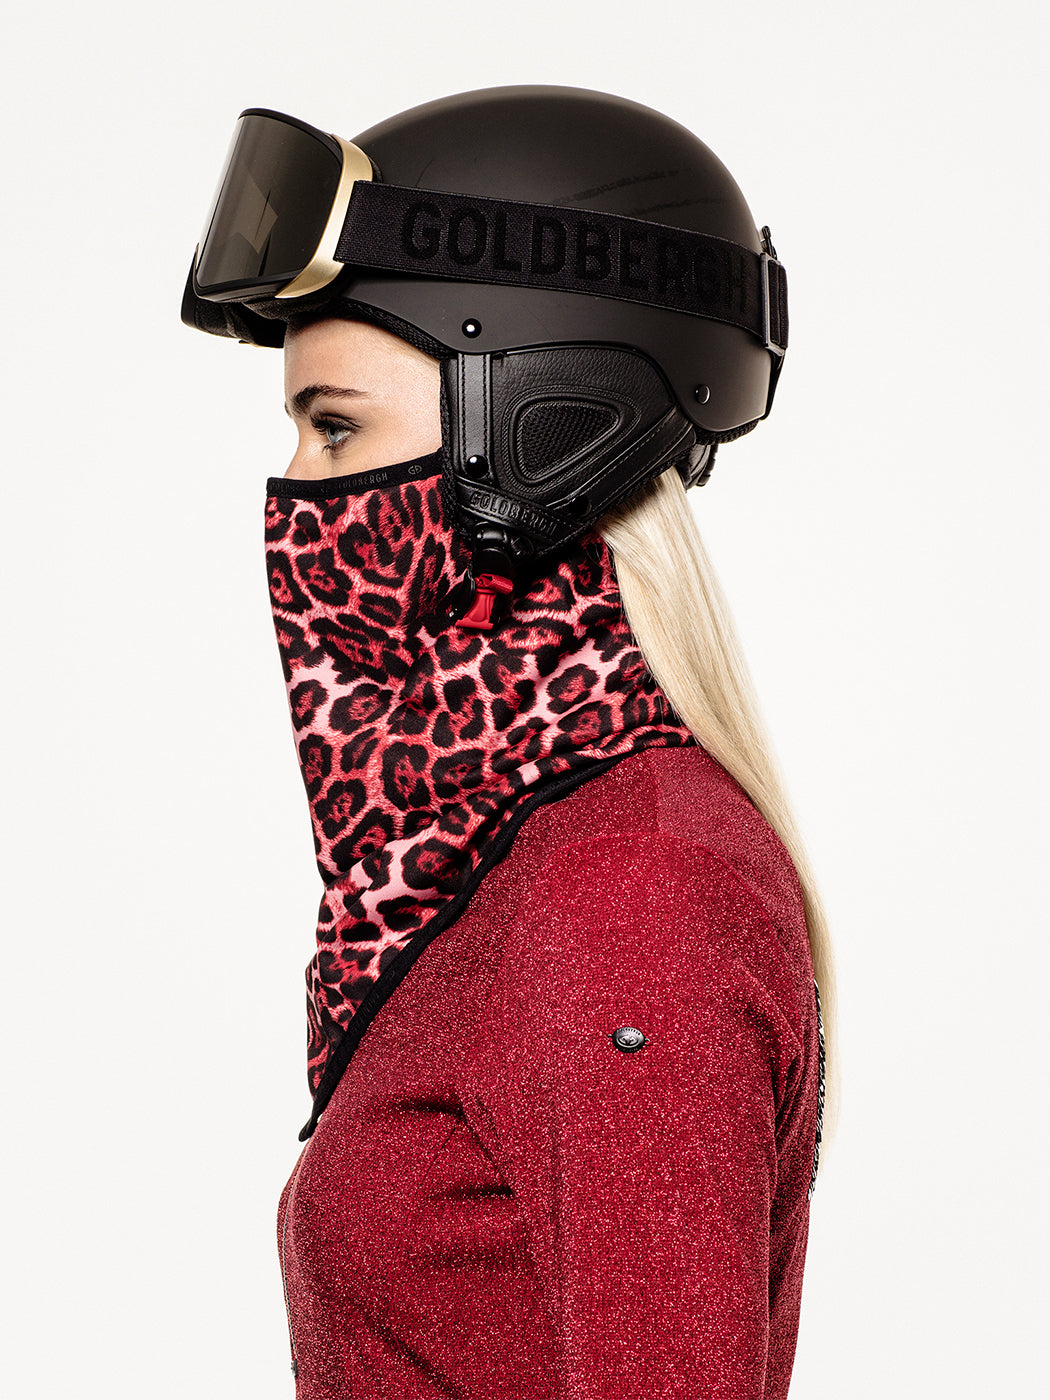 Goldbergh Marf Red Leopard Print Face Mask